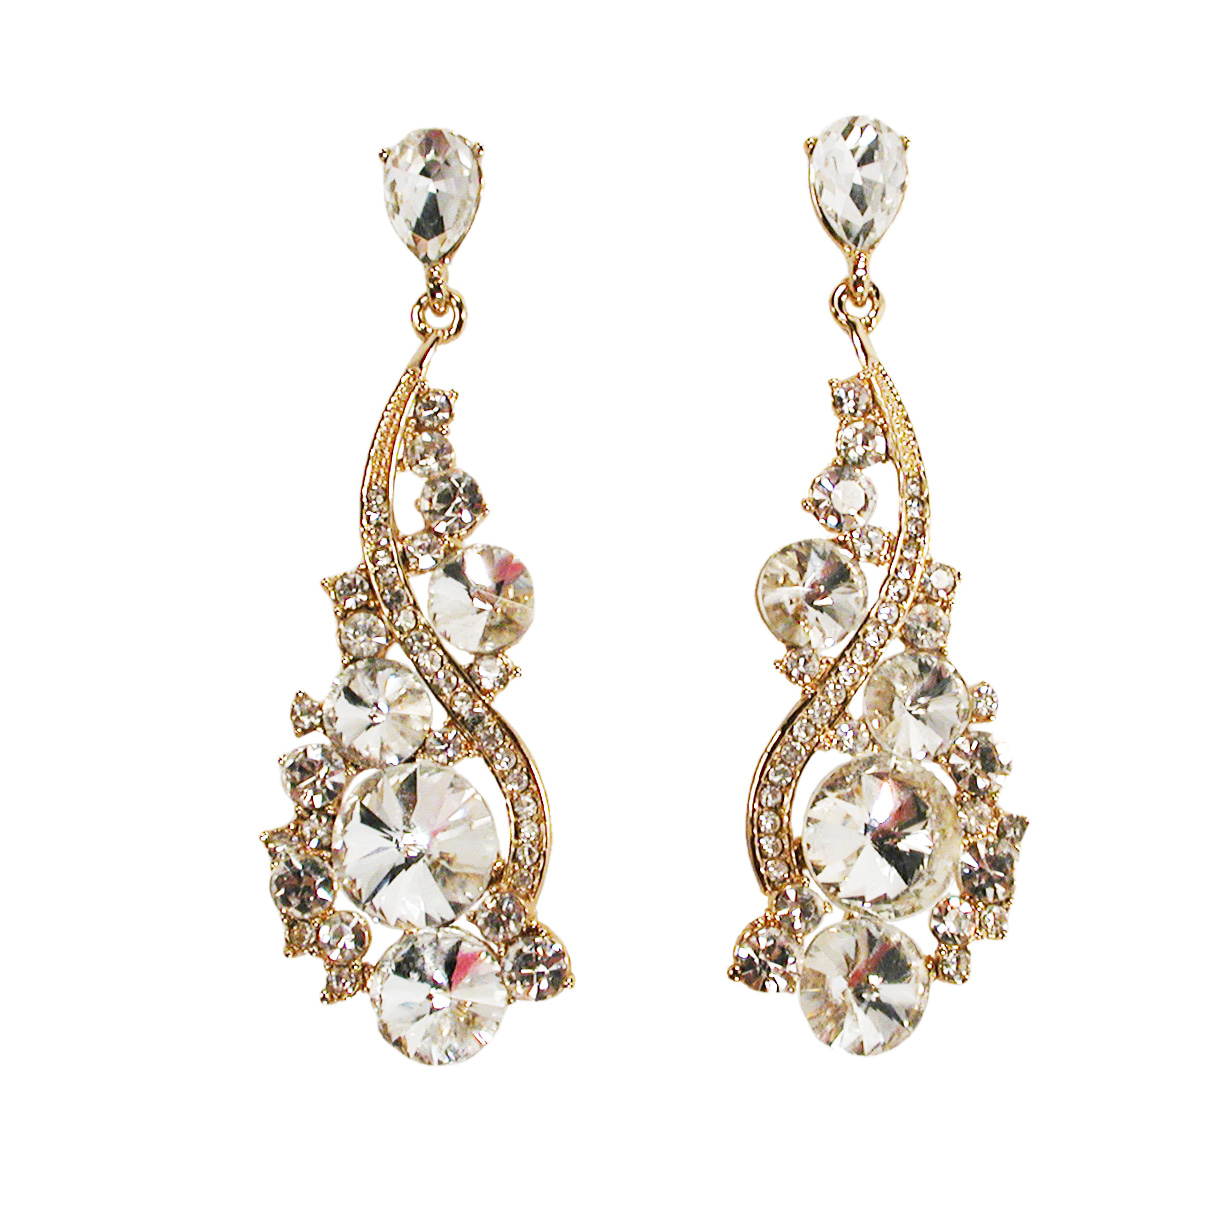  Large Long Drop Swirled Clear Crystal Rhinestone Earrings, a fashion accessorie - Evening Elegance